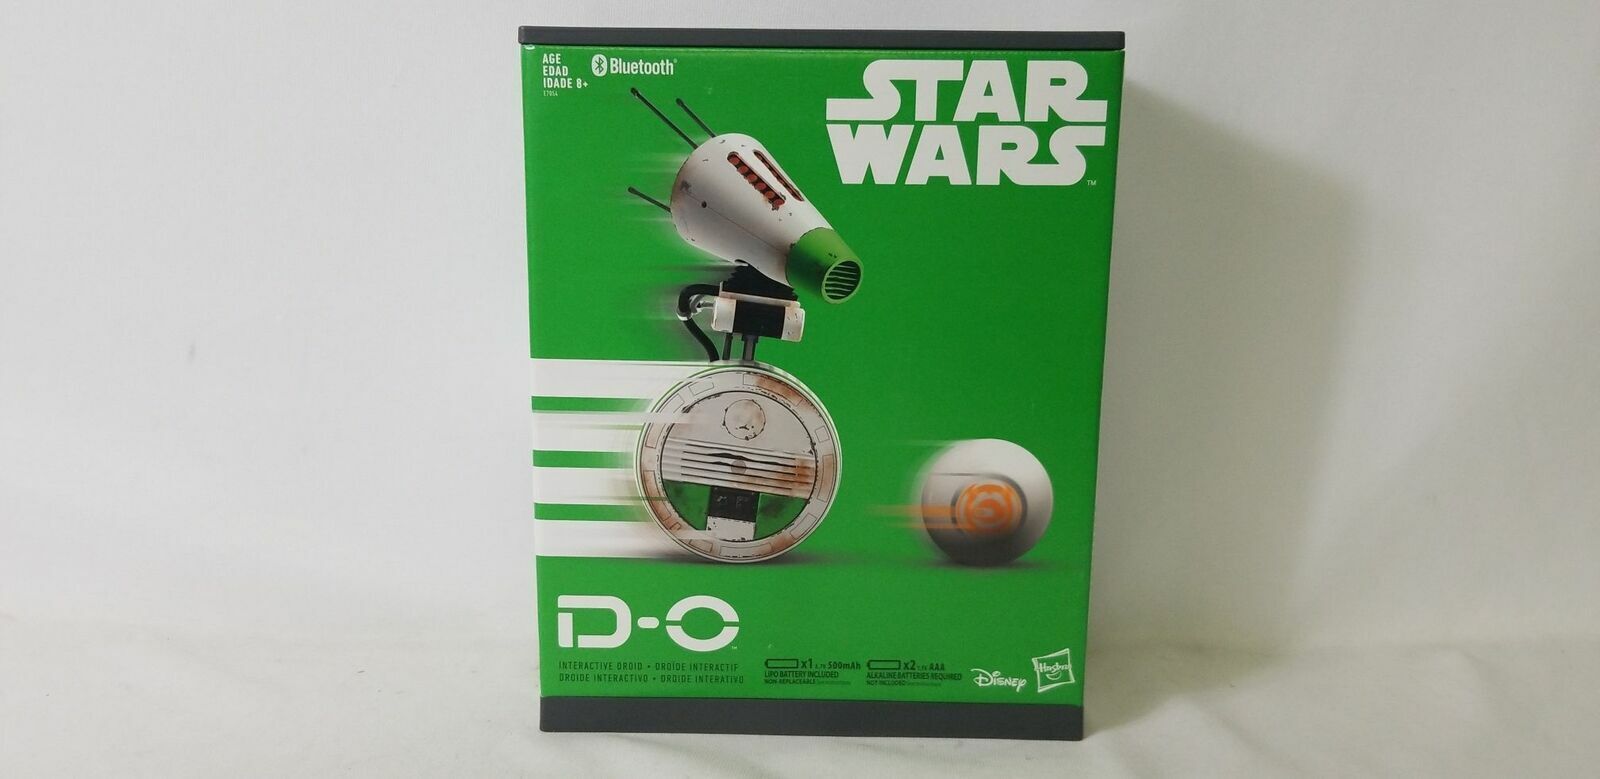 Star Wars D-O Hasbro Exclusive Bluetooth Remote Control Interactive Droid